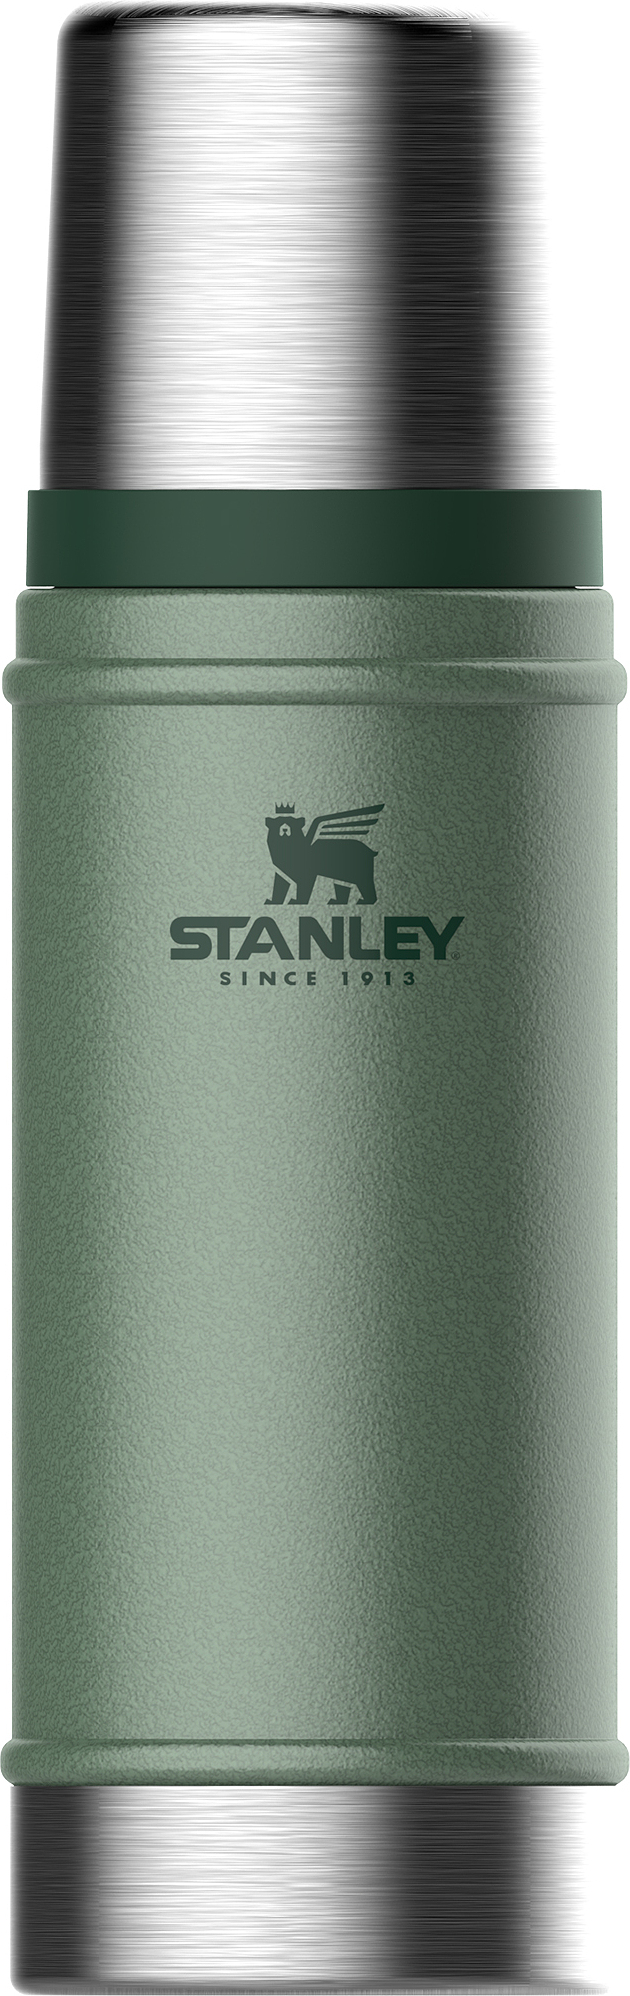 https://3fa-media.com/stanley/stanley-legendary-classic-thermos-green__71808_902e0ff-s2500x2500.jpg